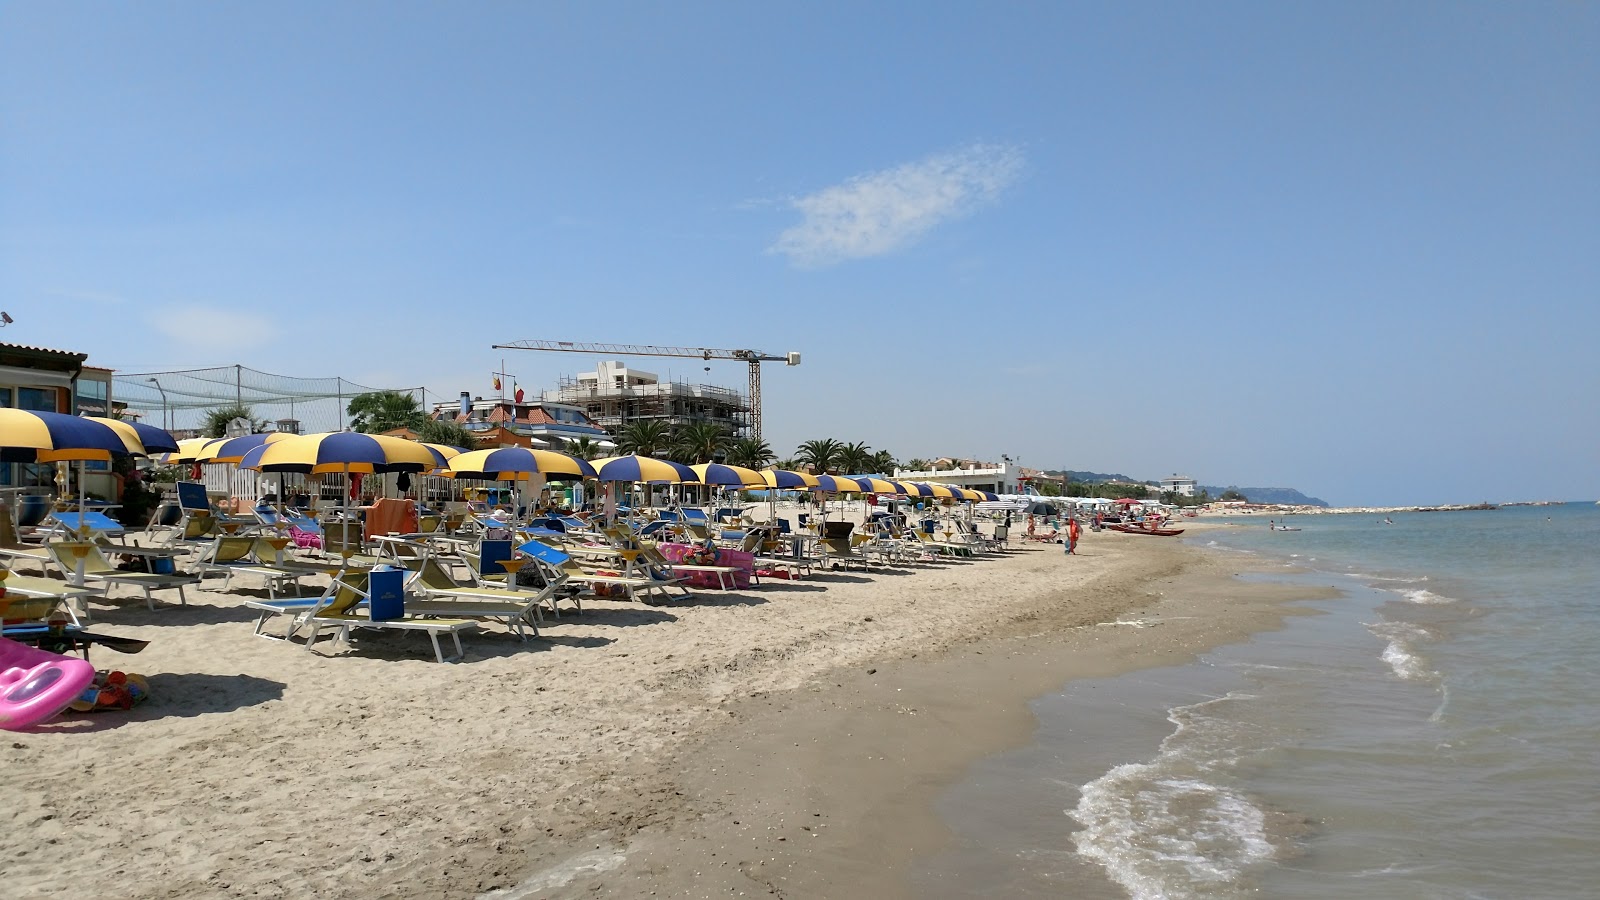 Photo of Cupra Marittima beach resort area